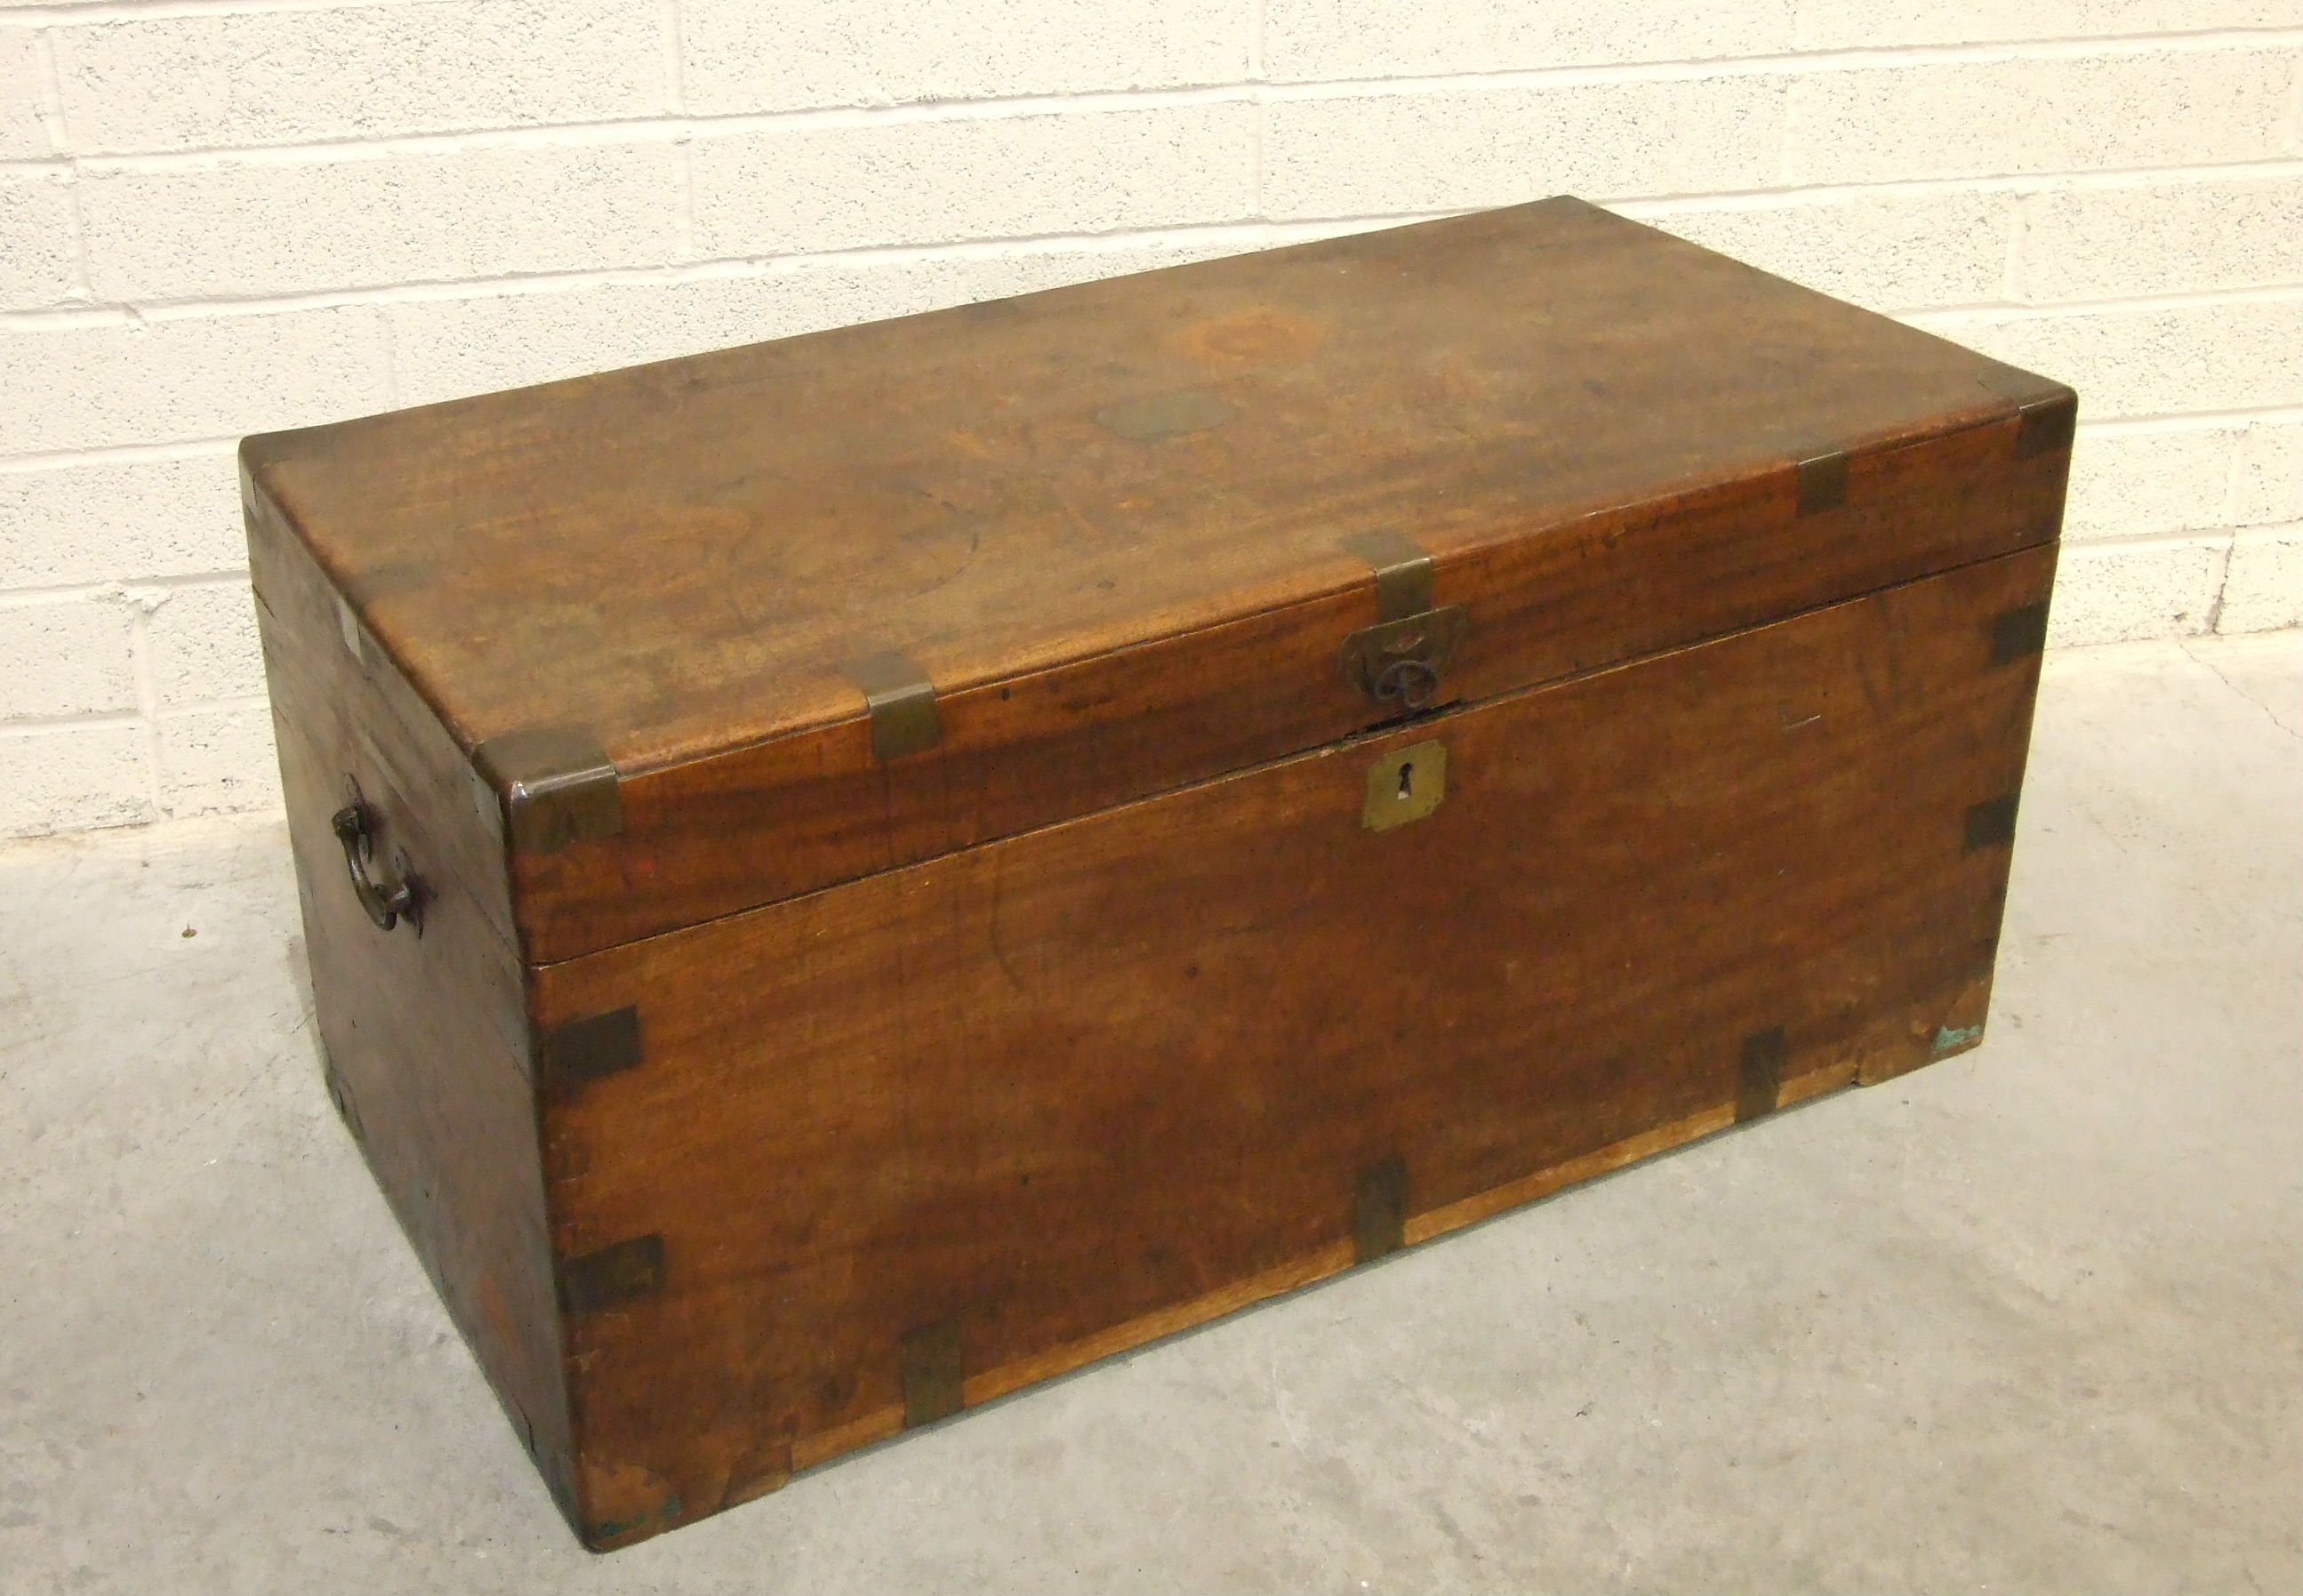 A Victorian teak brass-bound blanket chest with intermediate and corner bindings, 104cm wide, 49cm